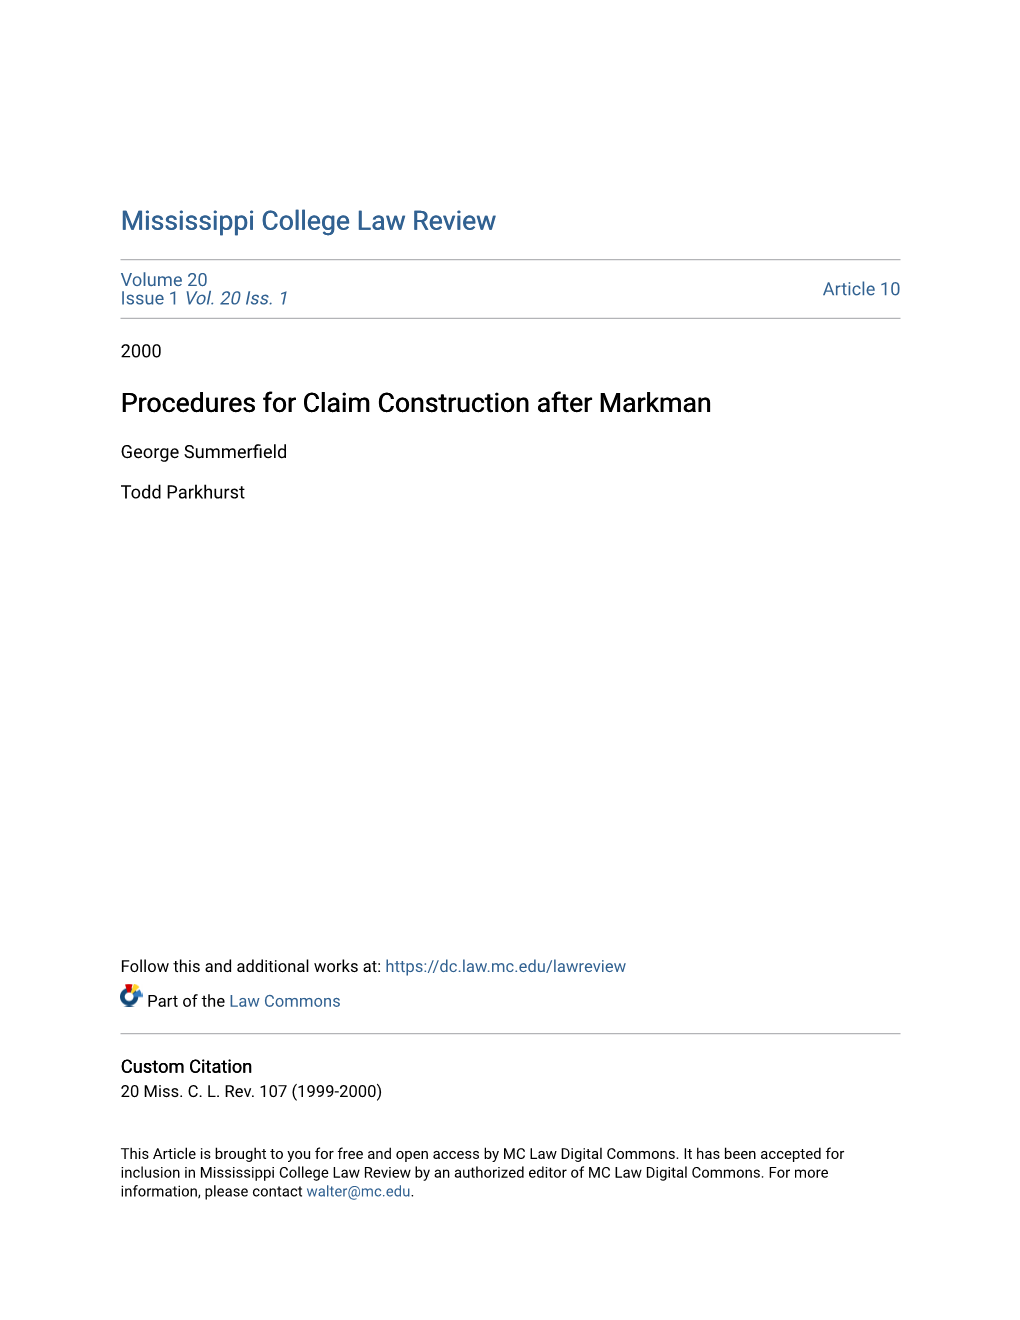 Procedures for Claim Construction After Markman